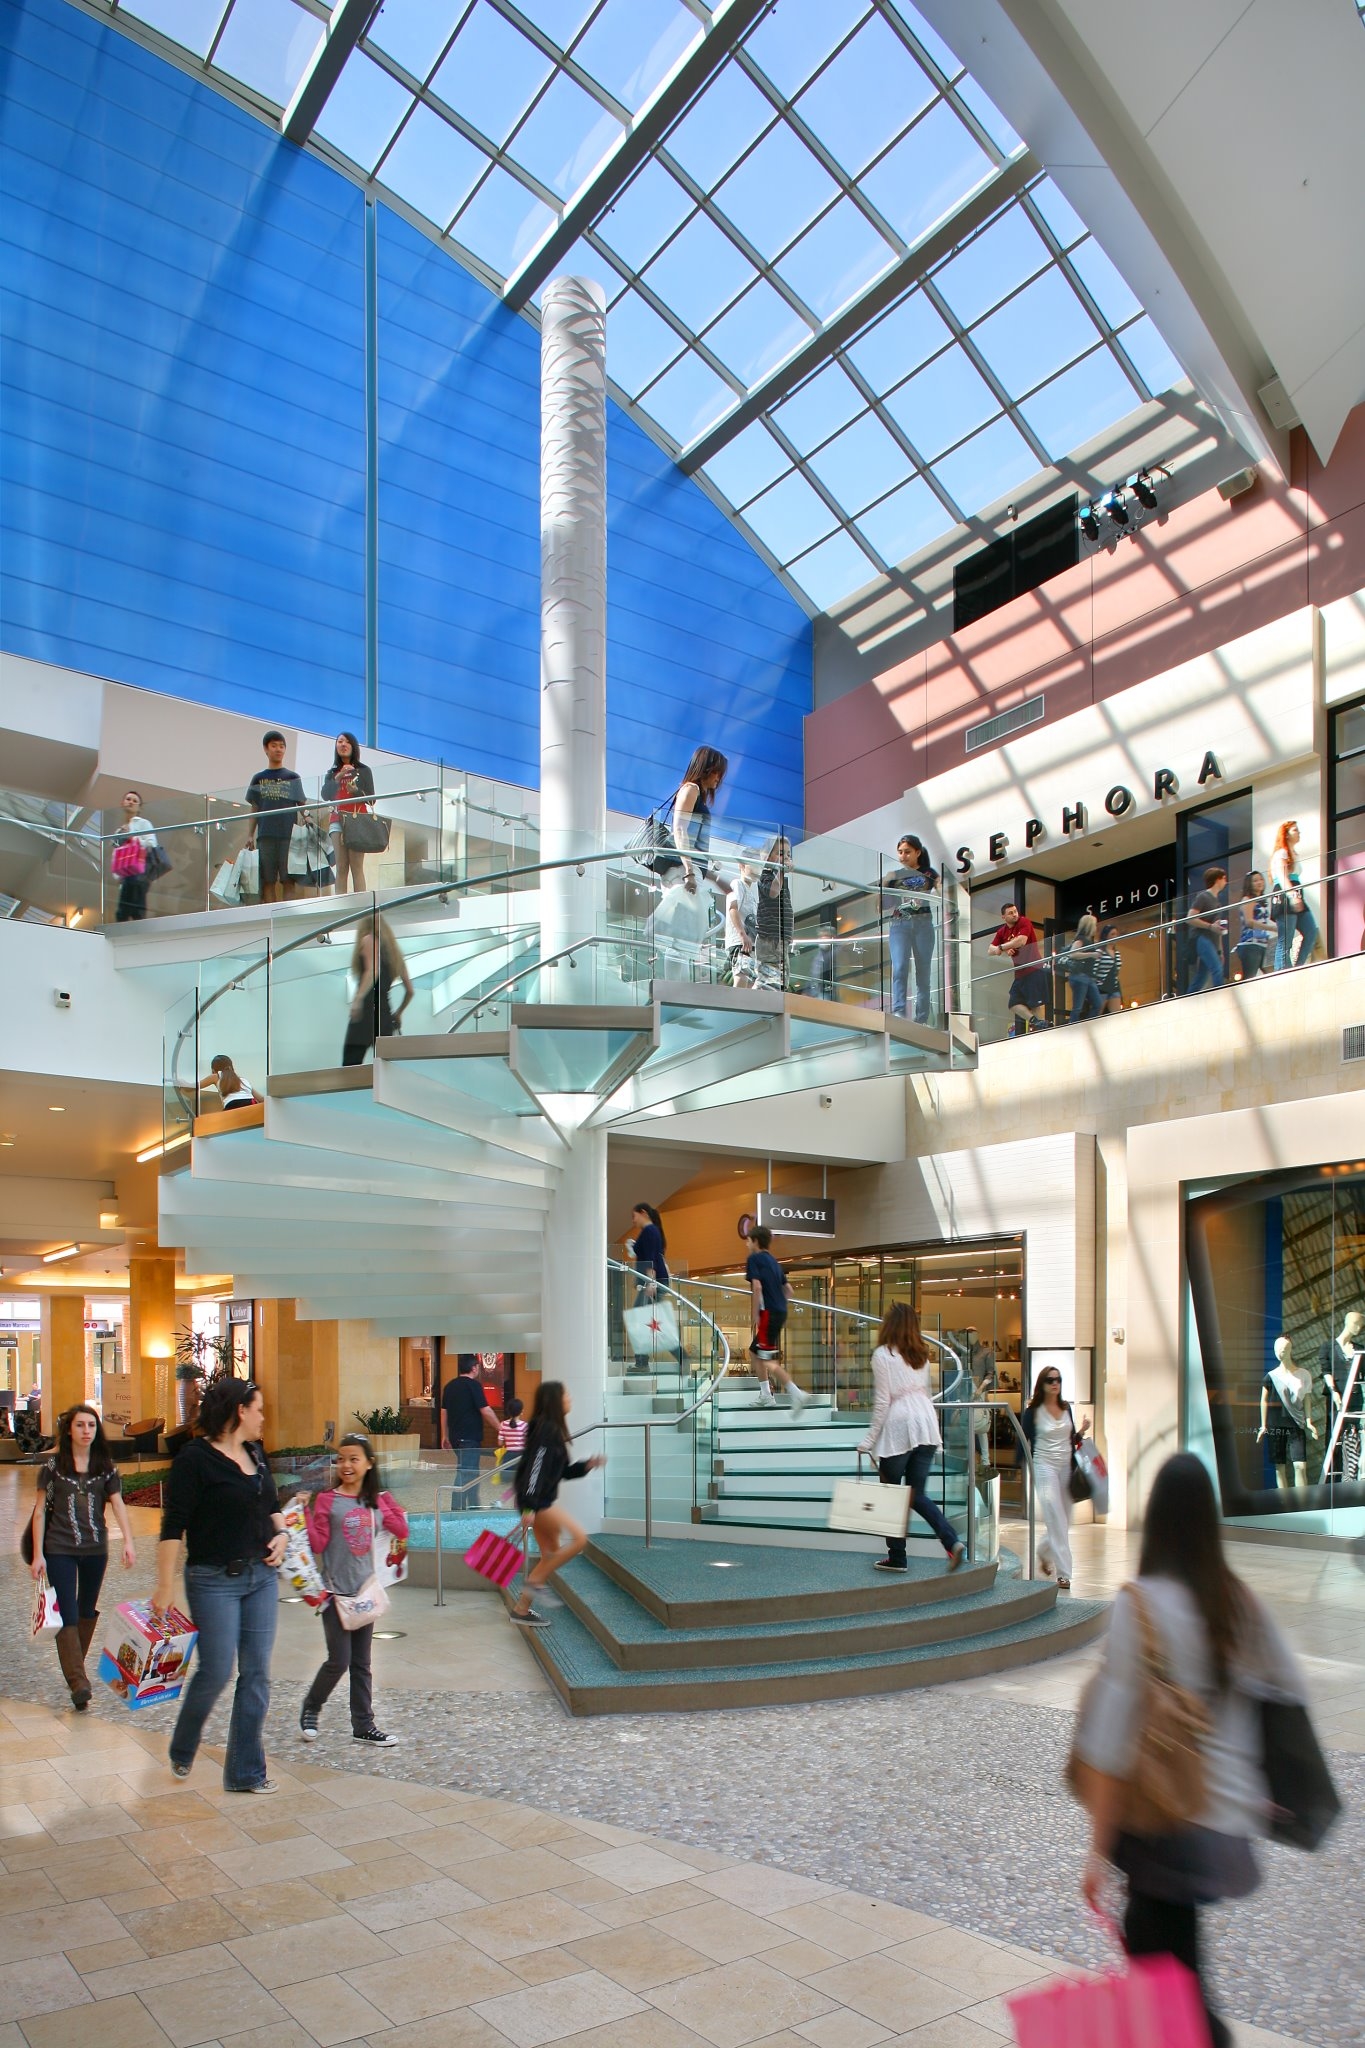 Westfield Topanga - mall in Los Angeles, California, USA 